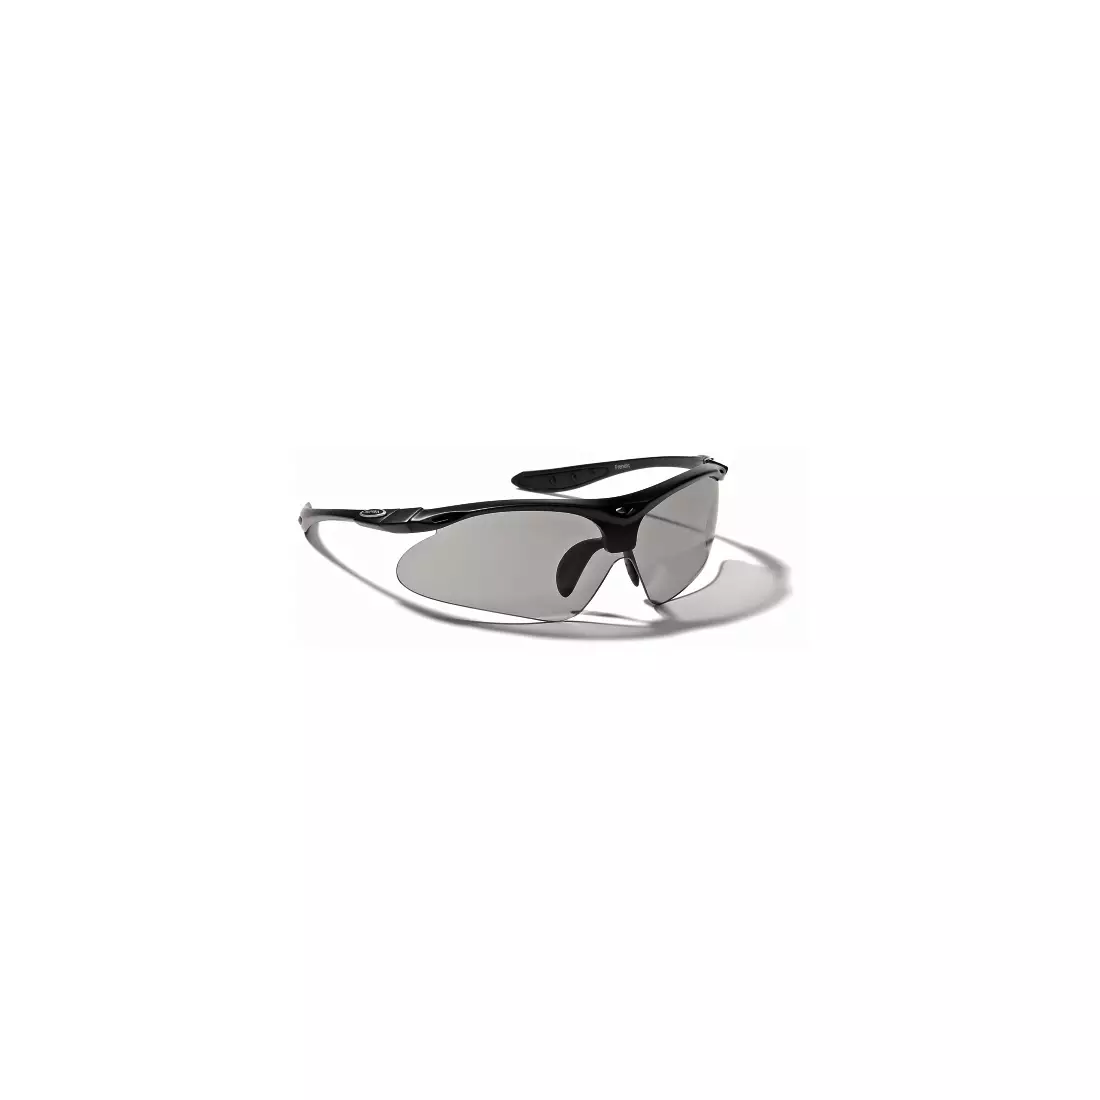 ALPINA FRENETIC sports glasses - photochromic - color: Black